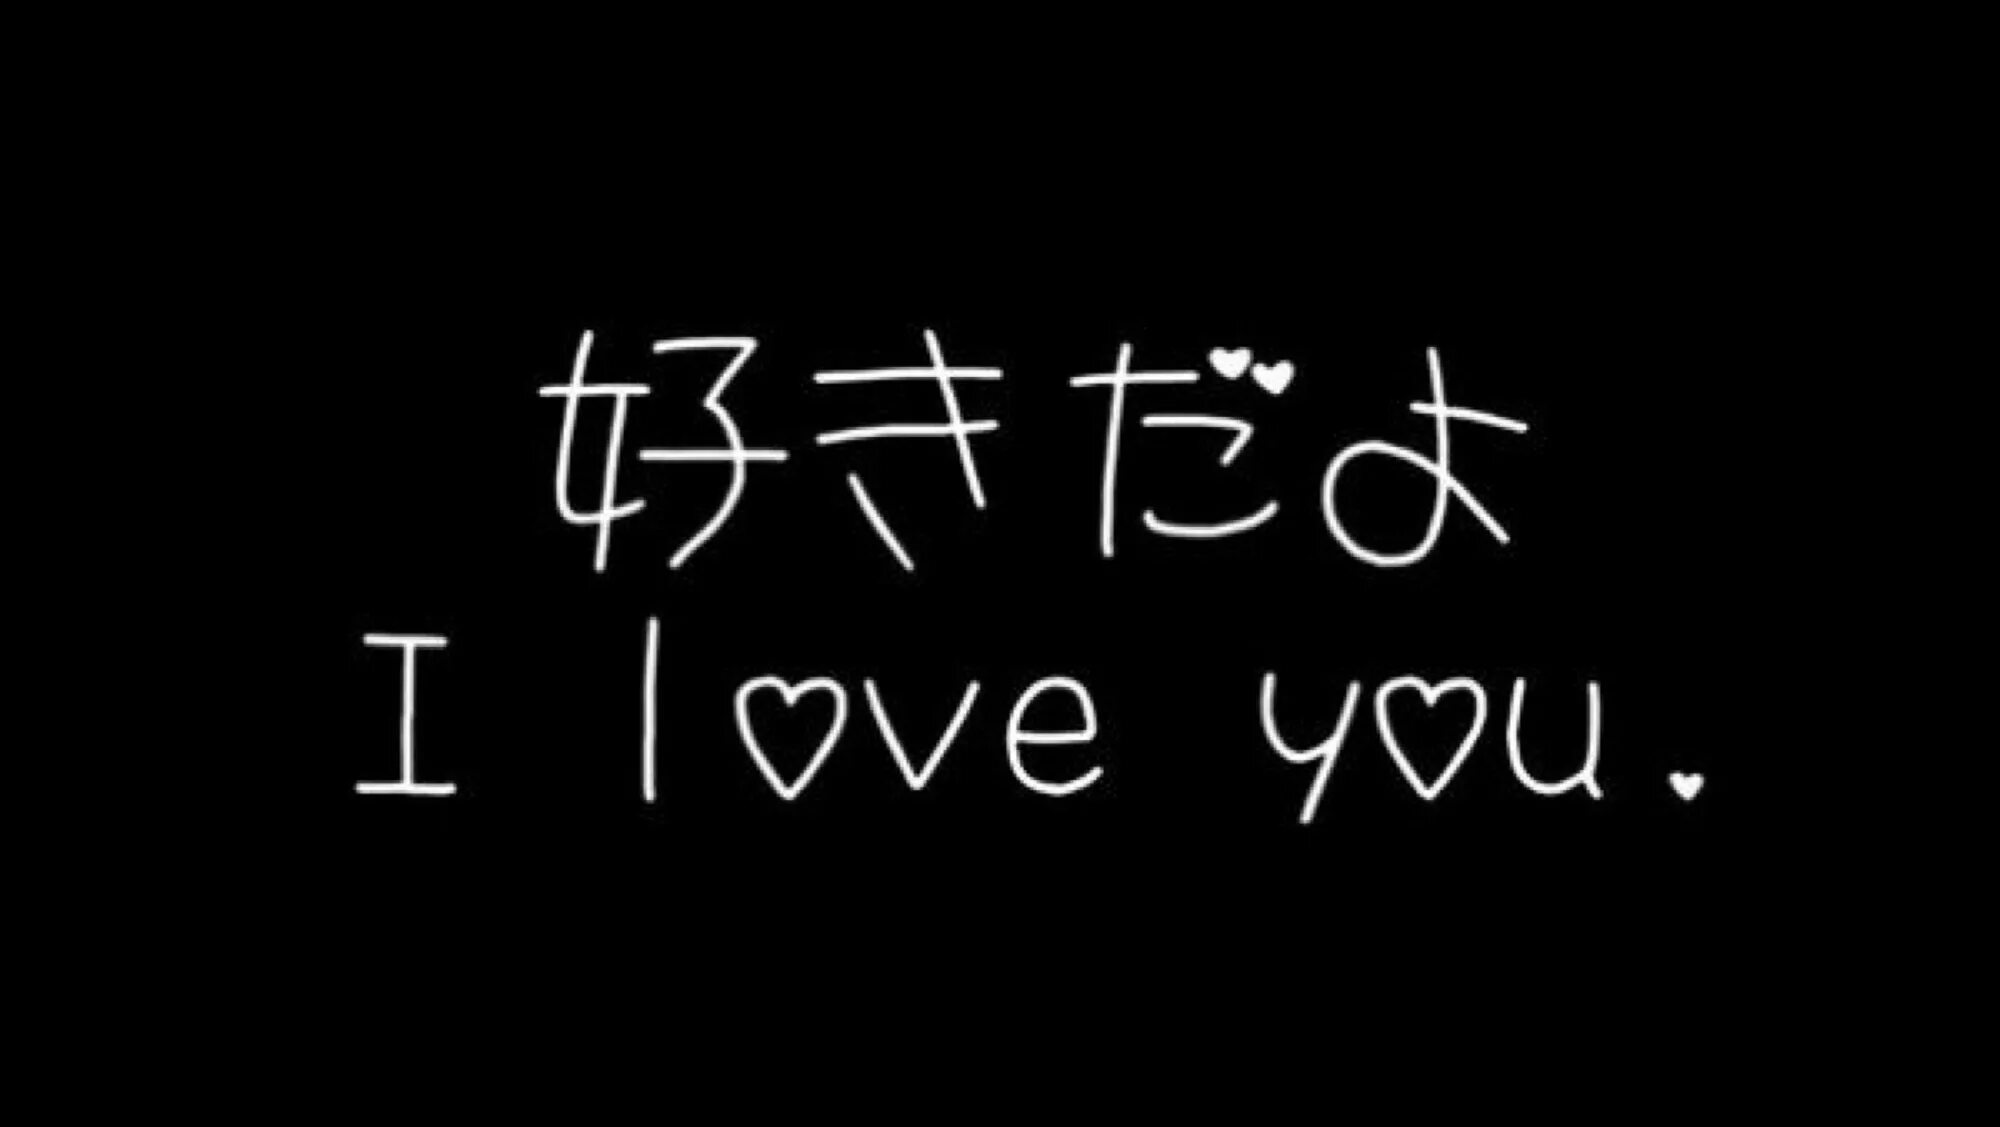 Я тебя люблю на японском. Я Я тебя люблю. Японские слова я тебя люблю. Японские фразы на черном фоне.